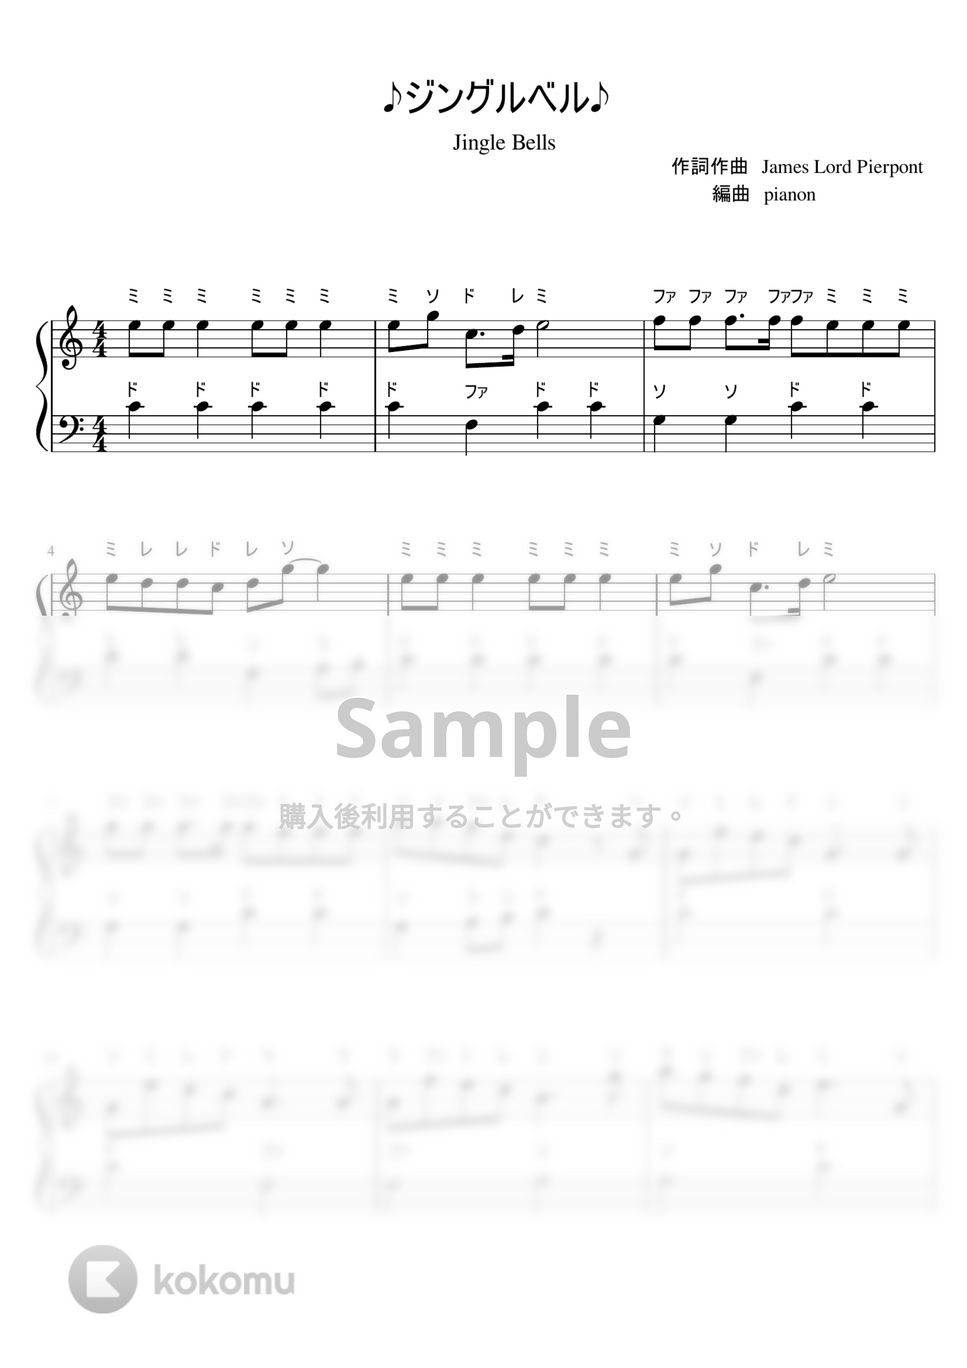 James Lord Pierpont - ジングルベル (ピアノソロ入門) by pianon